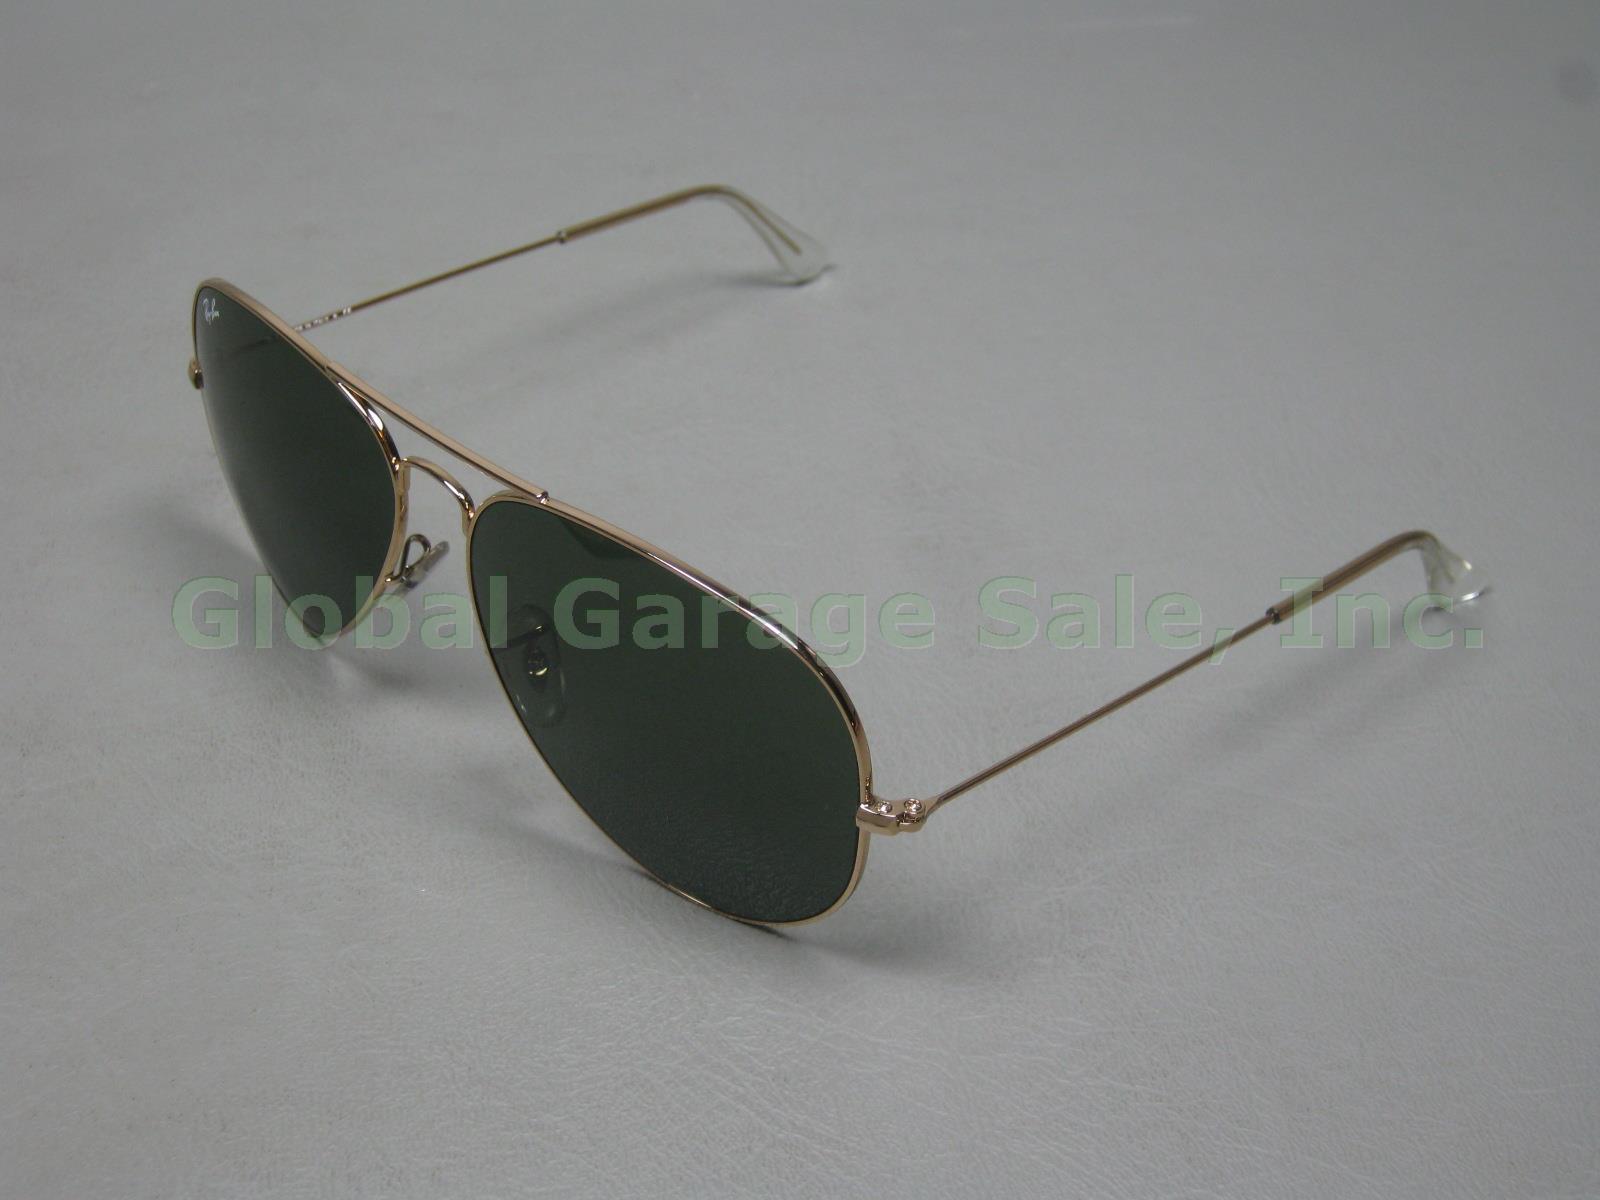 Ray Ban Aviator RB3026 Large Gold Metal Frame II L2846 62 Green Lens Sunglasses 2